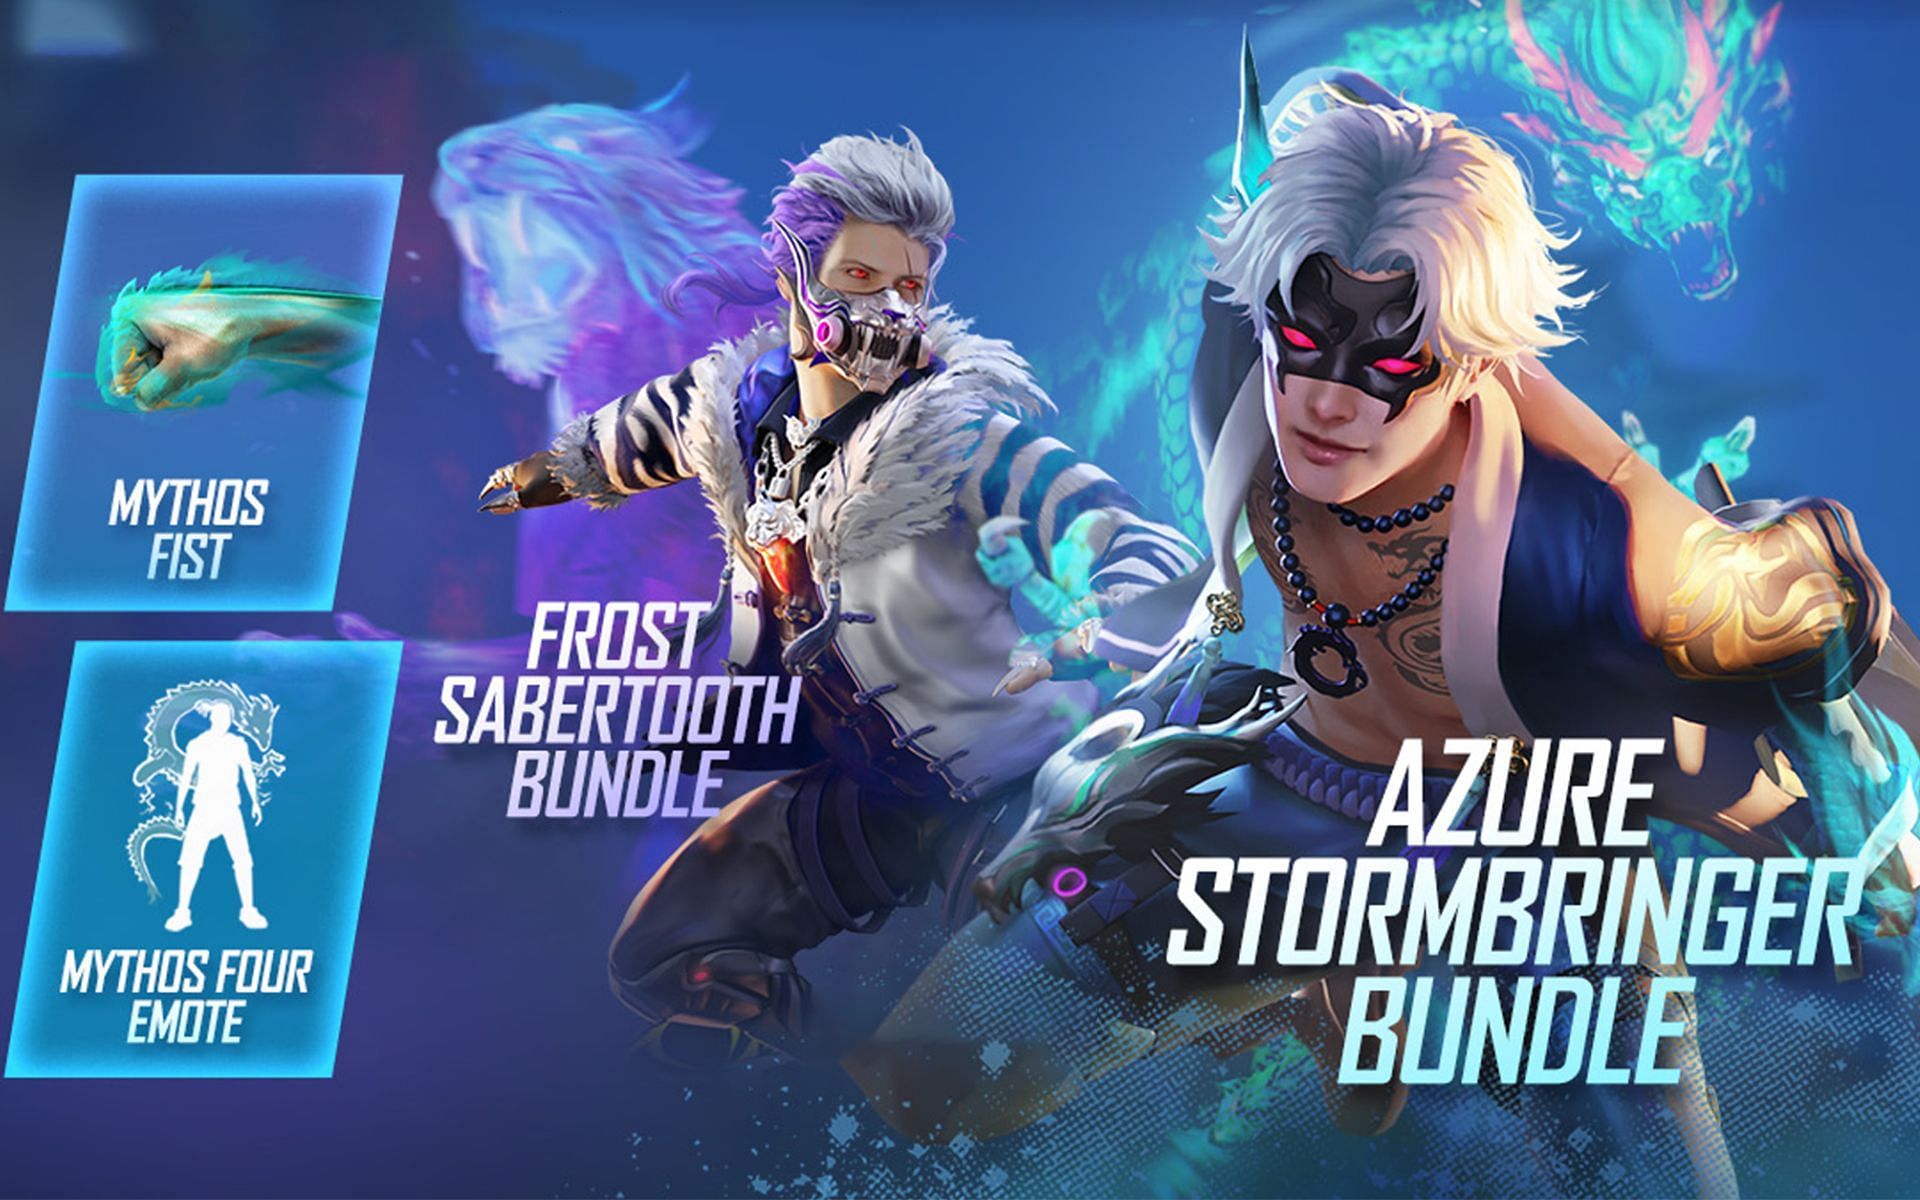 Frost Sabertooth and Azure Stormbringer bundles are back in Free Fire MAX (Image via Garena)